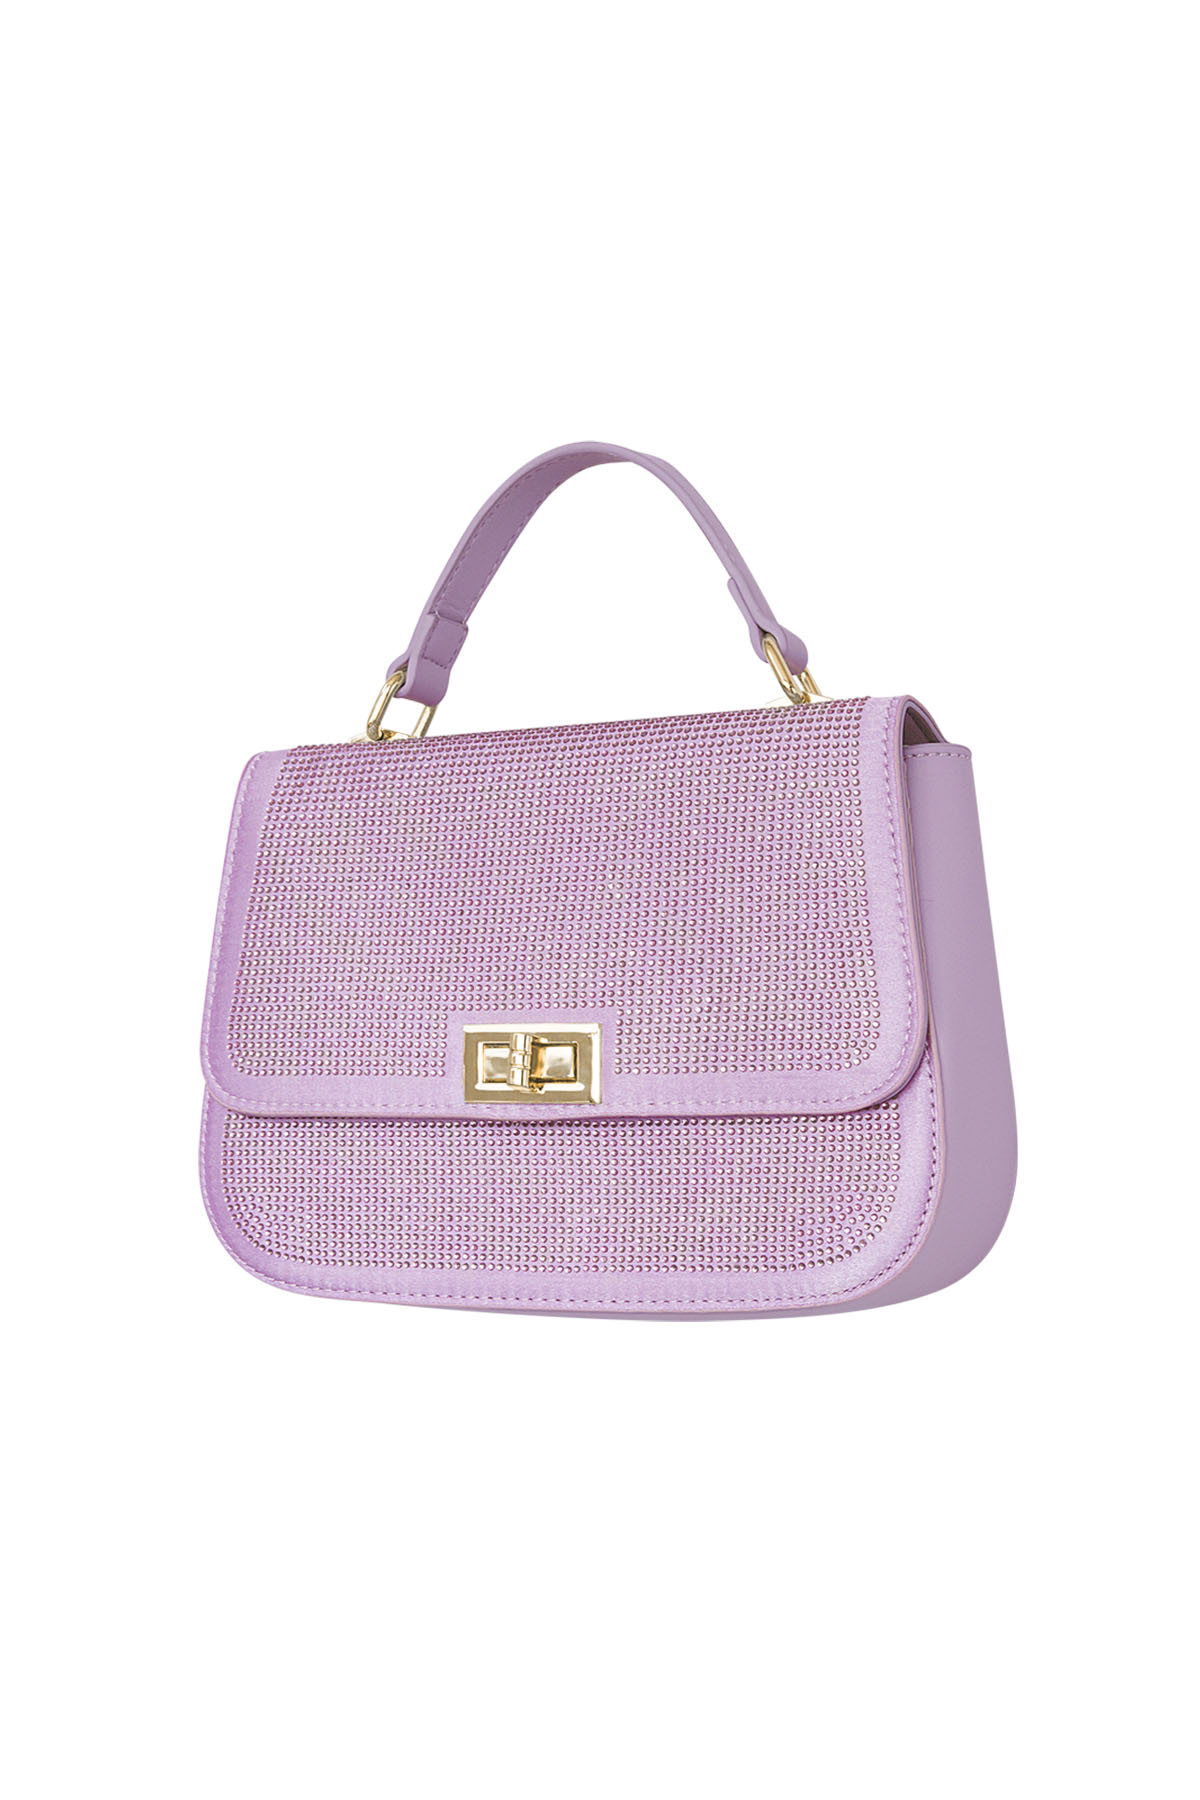 Handbag glamor - purple PU h5 